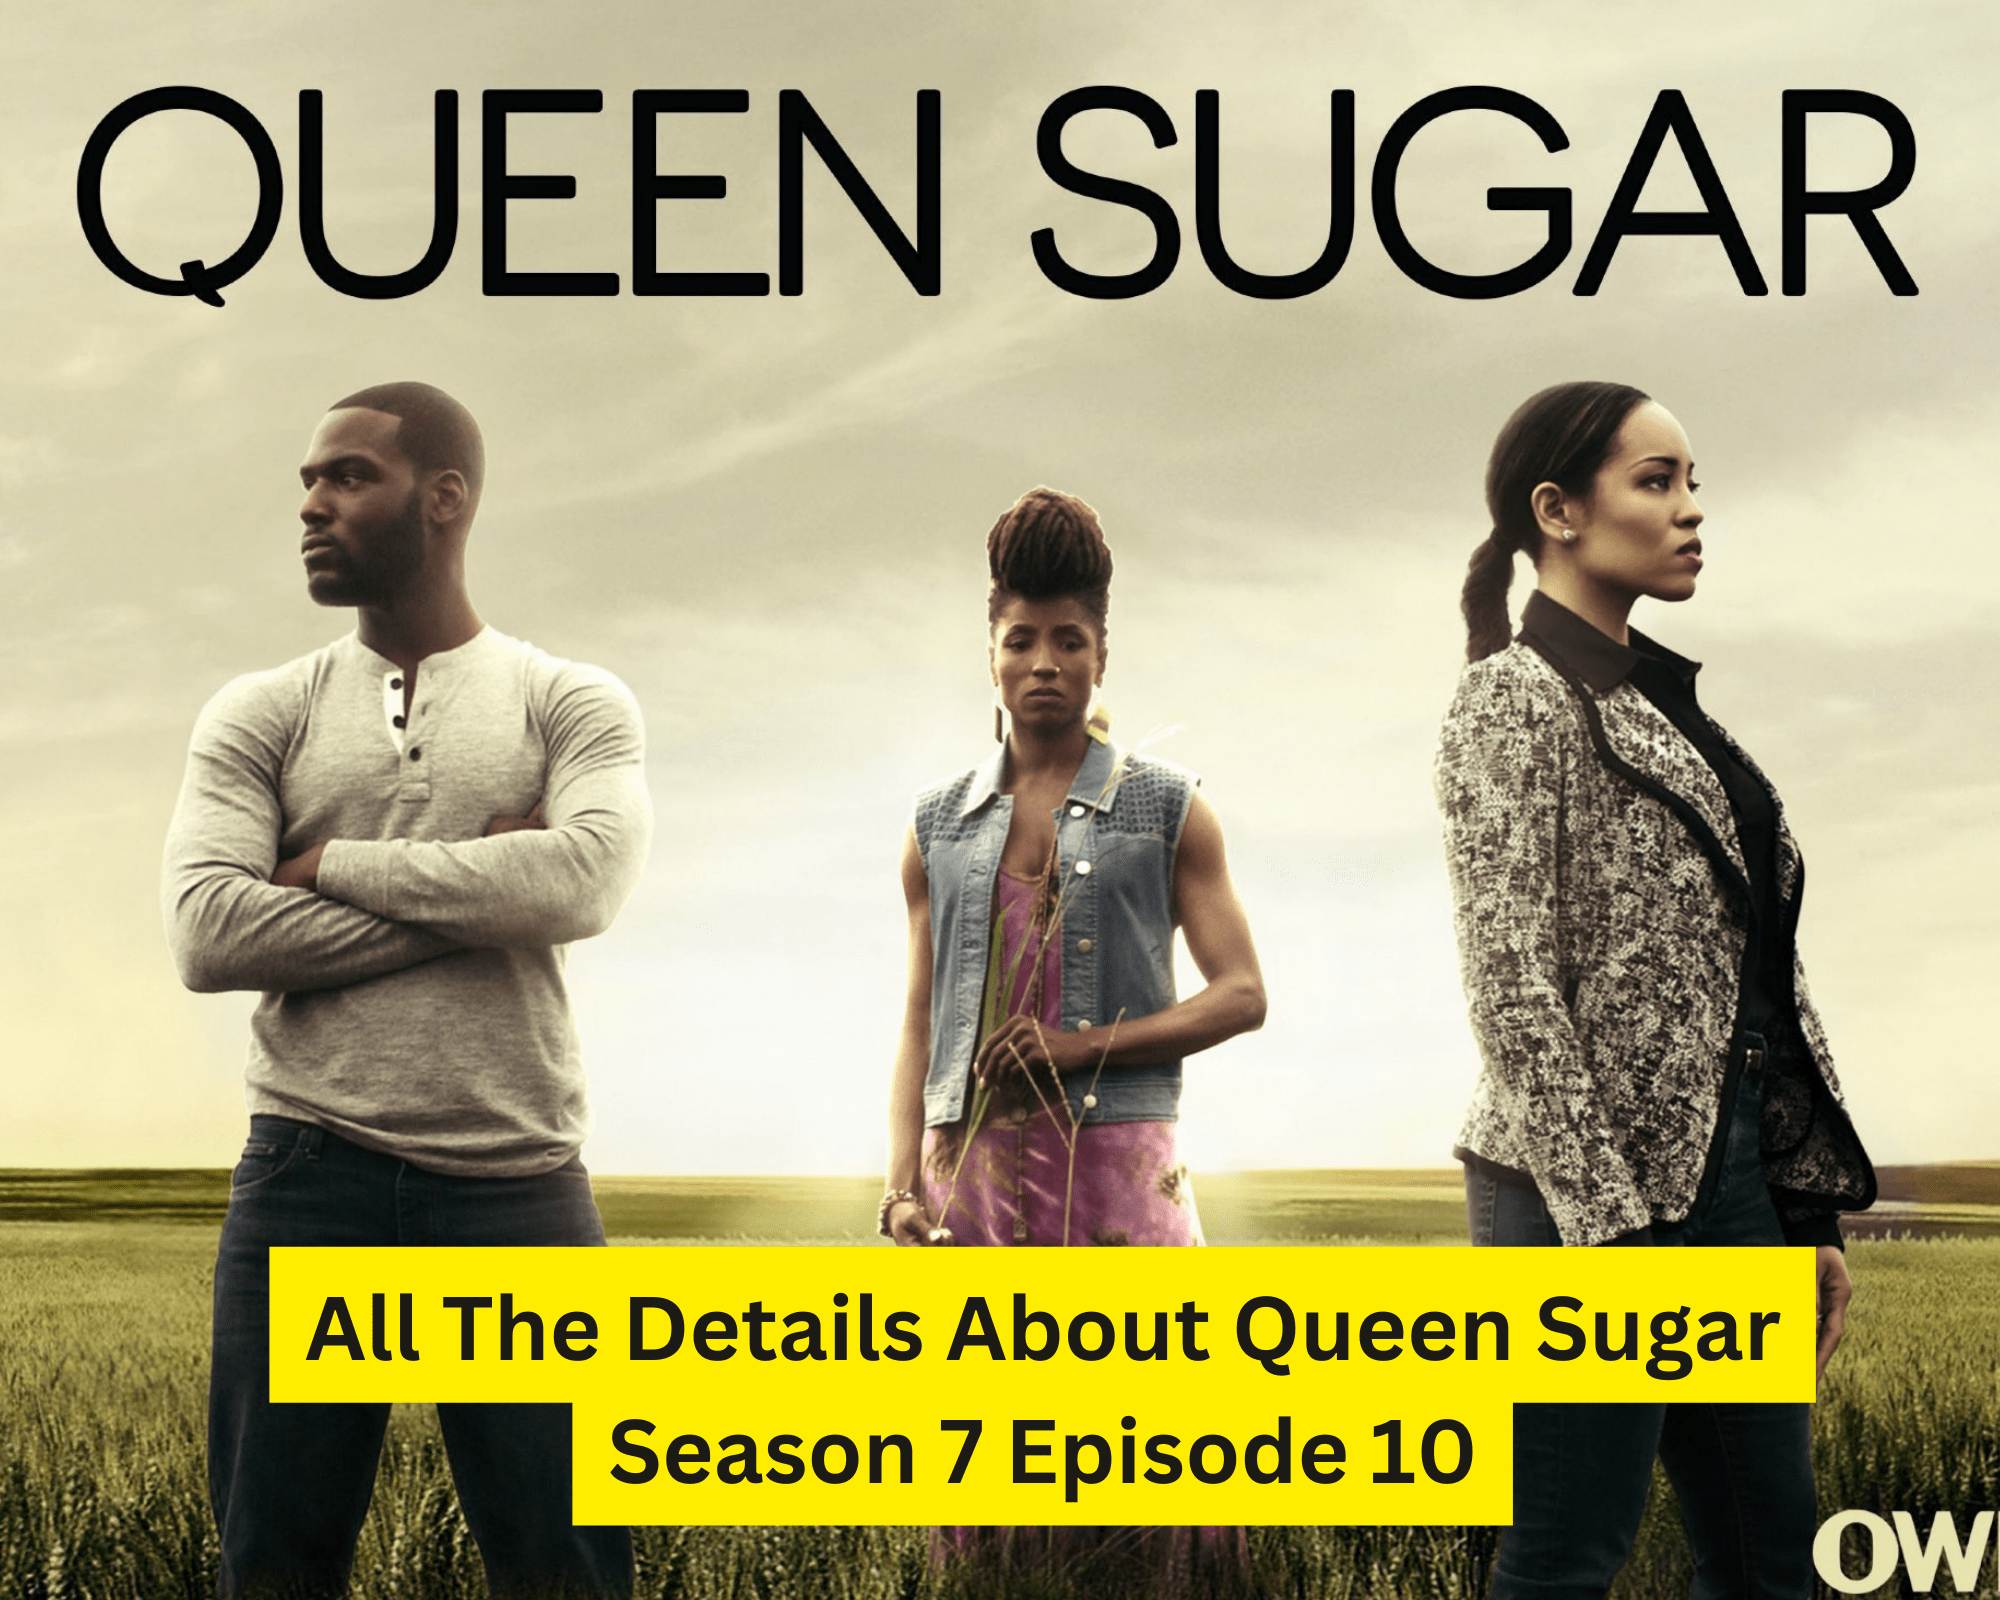 Queen Sugar Season 7 Episode 10 details about the show